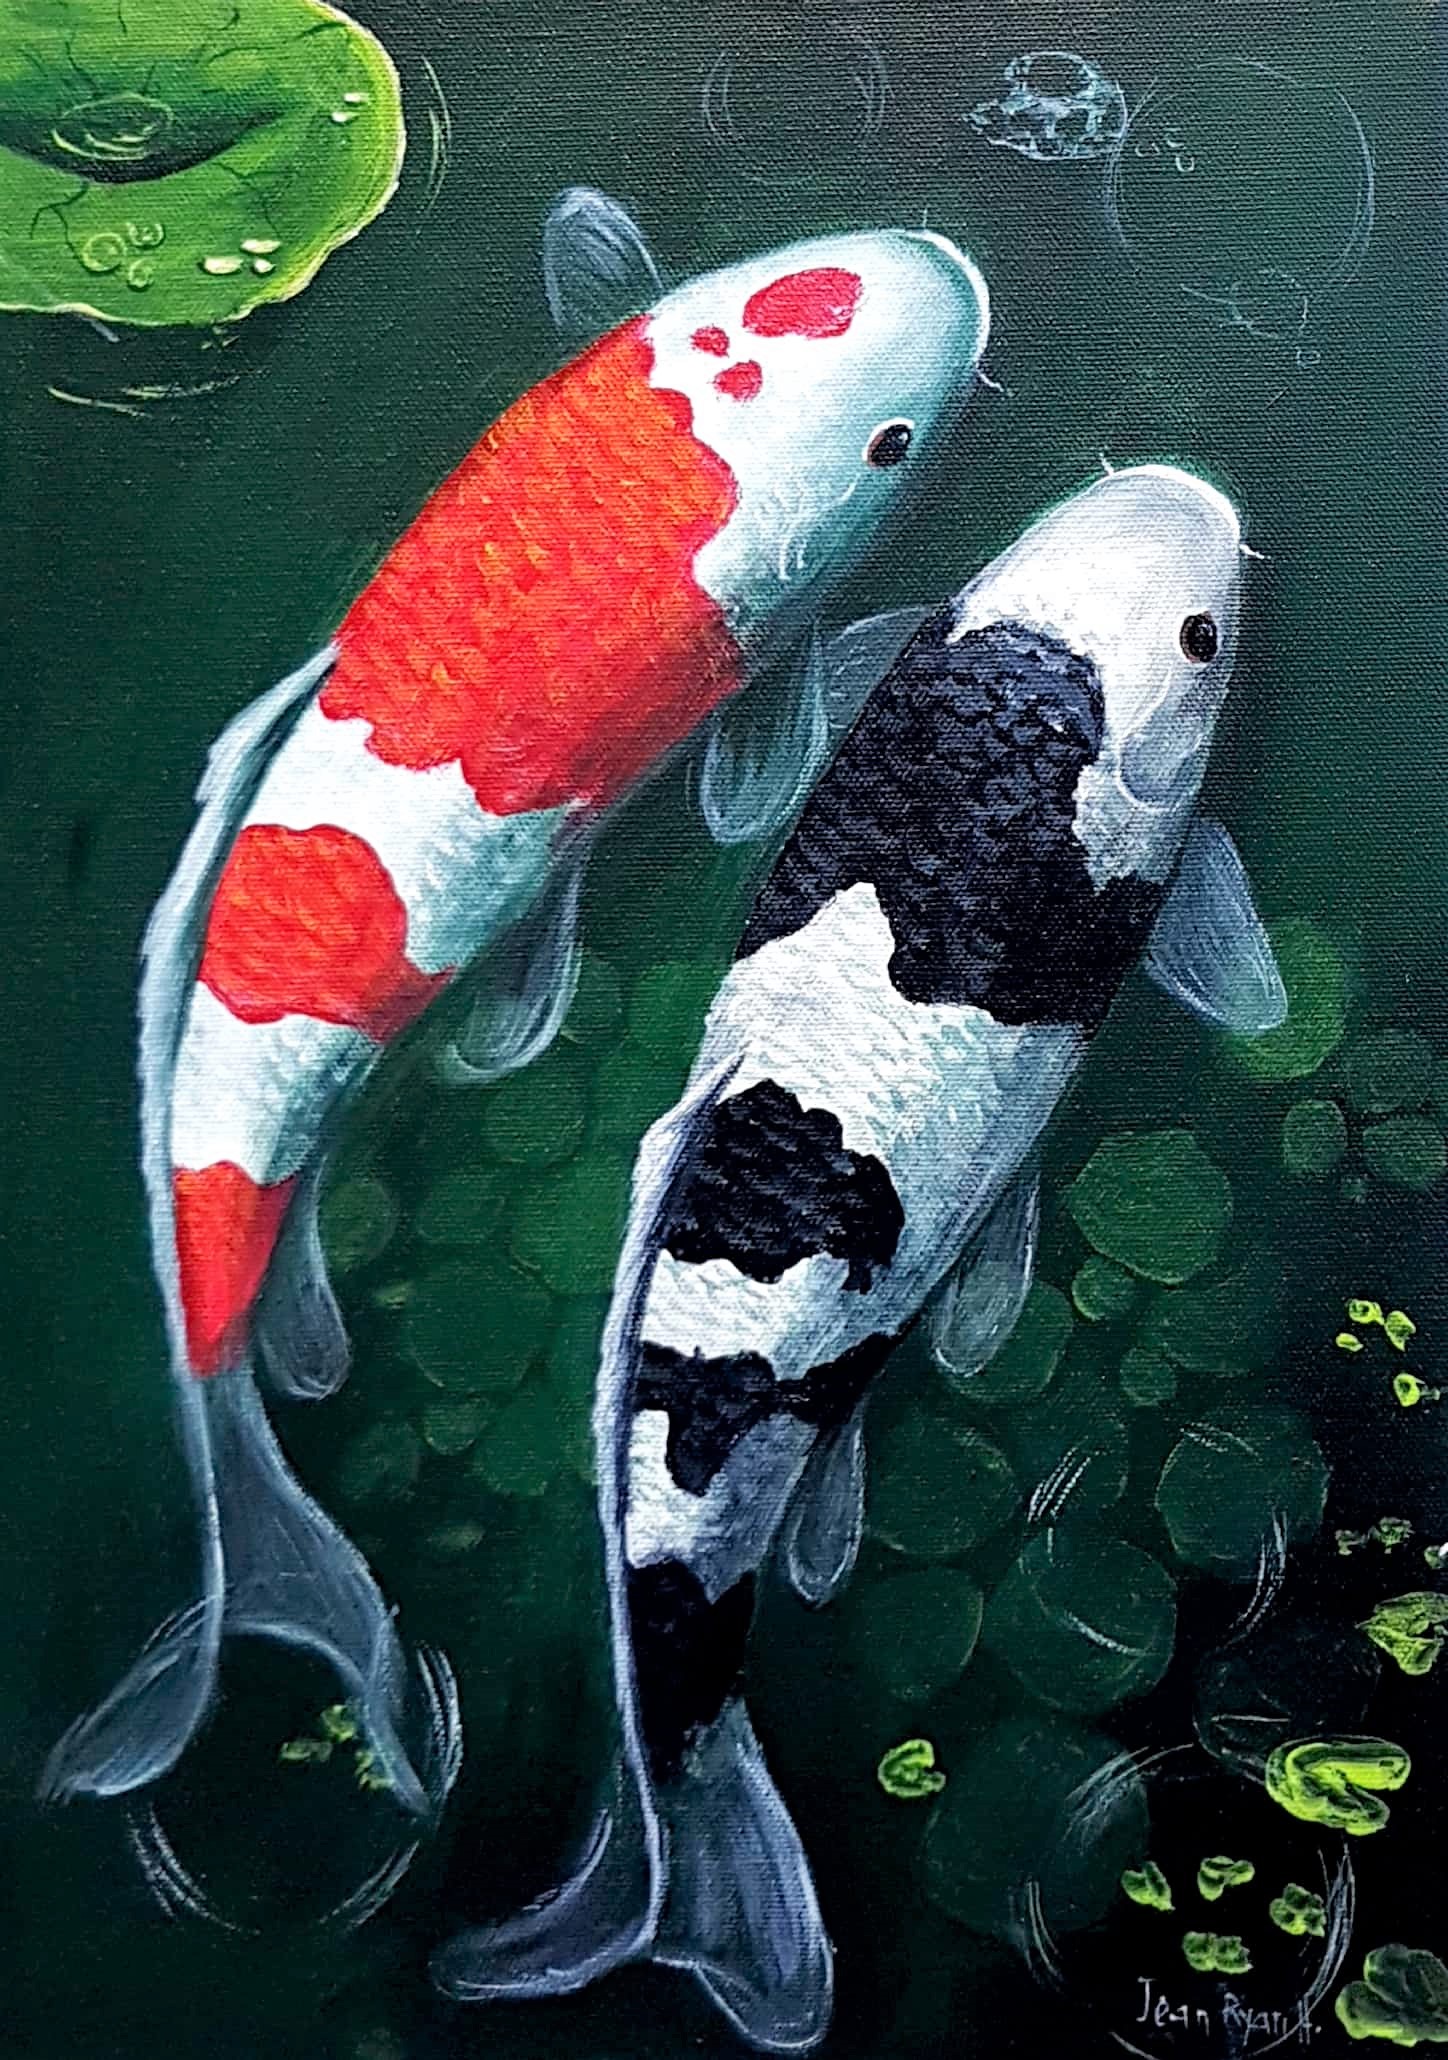 Jean Ryan Art – Koi Fish